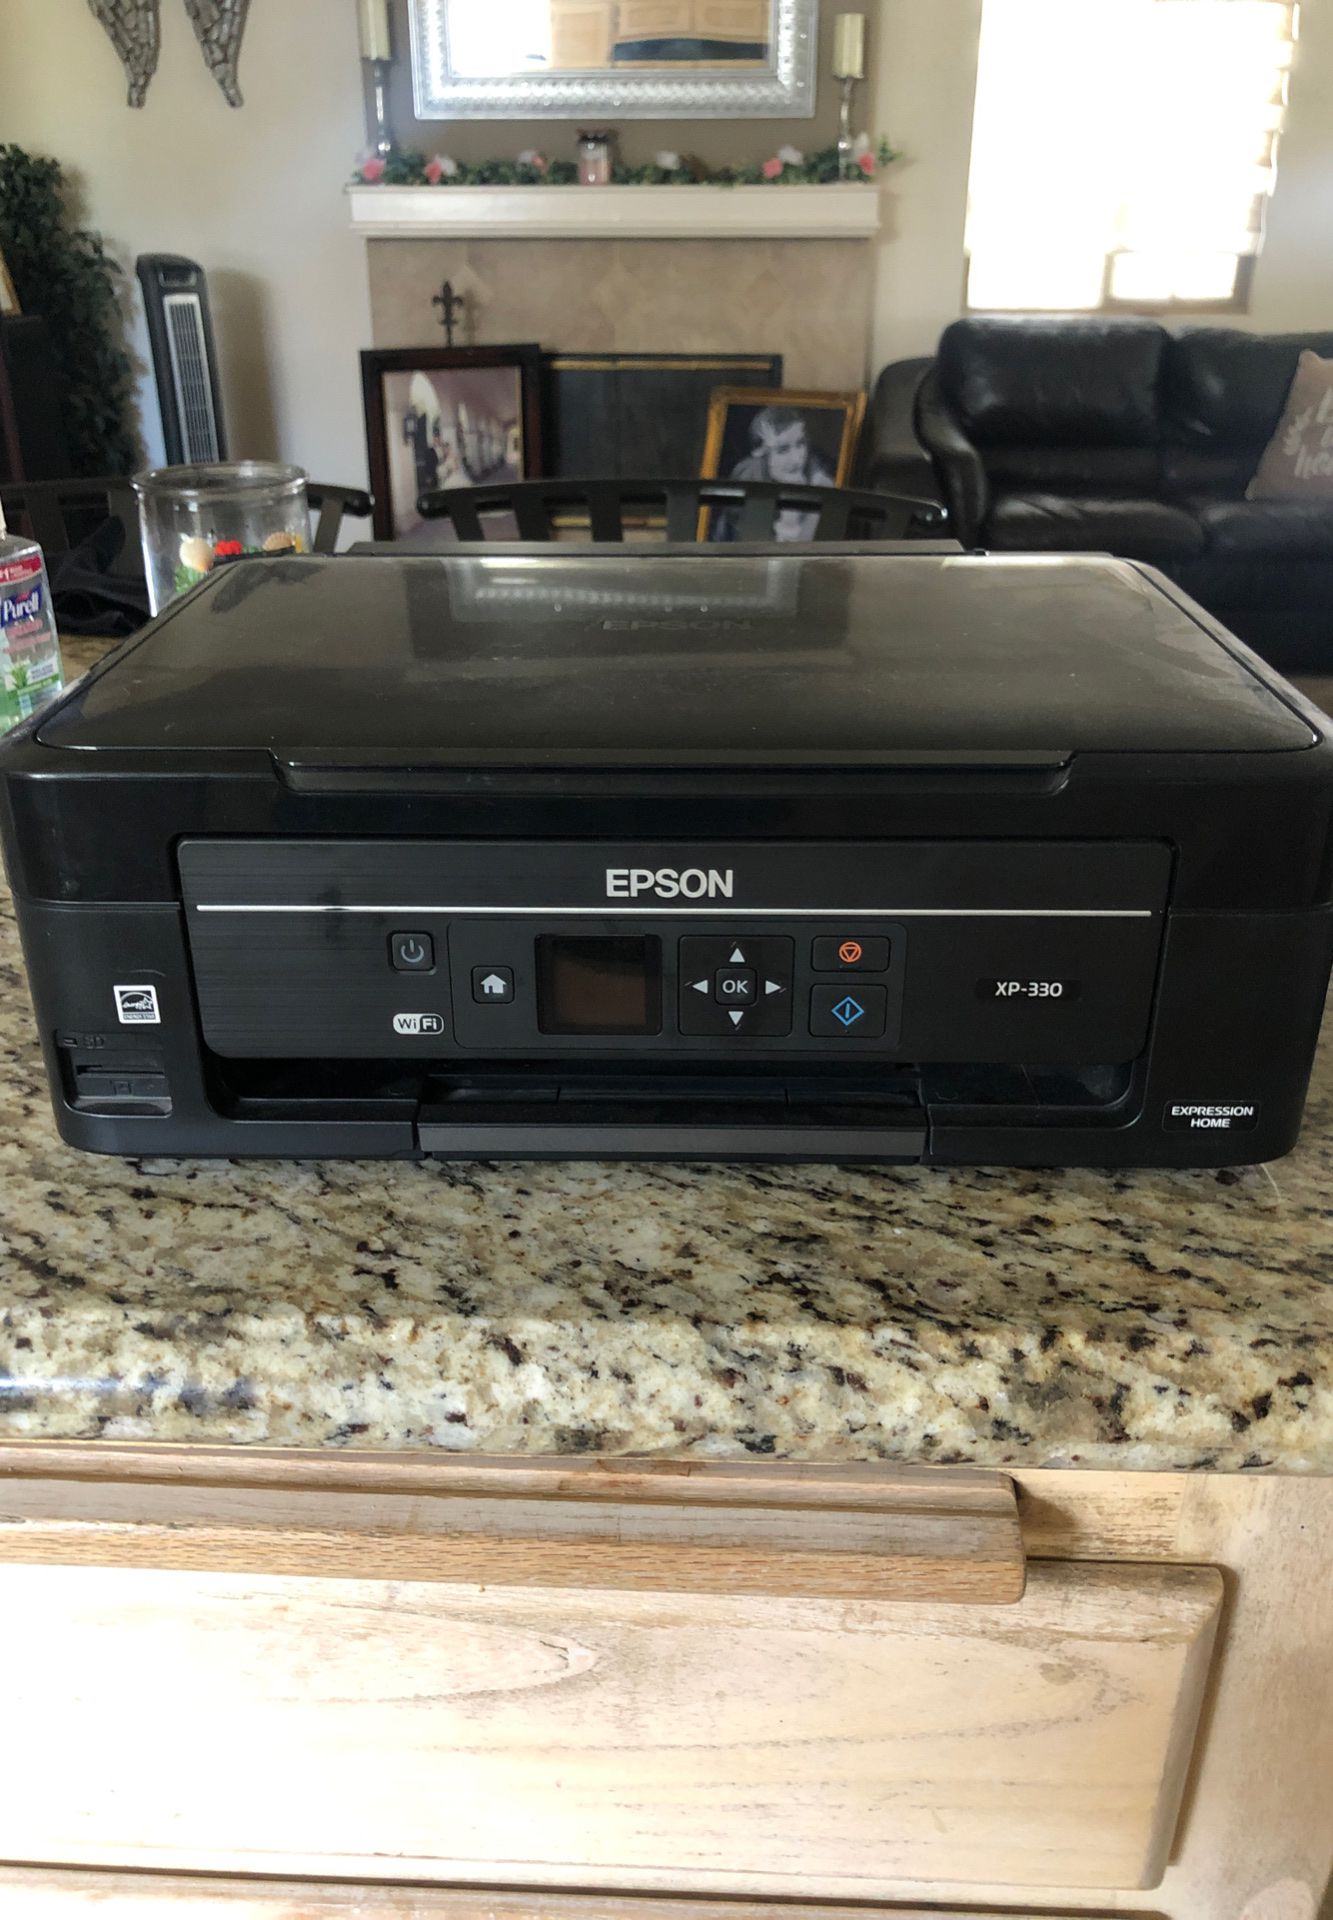 EPSON EXPRESSION HOME XP-330 printer